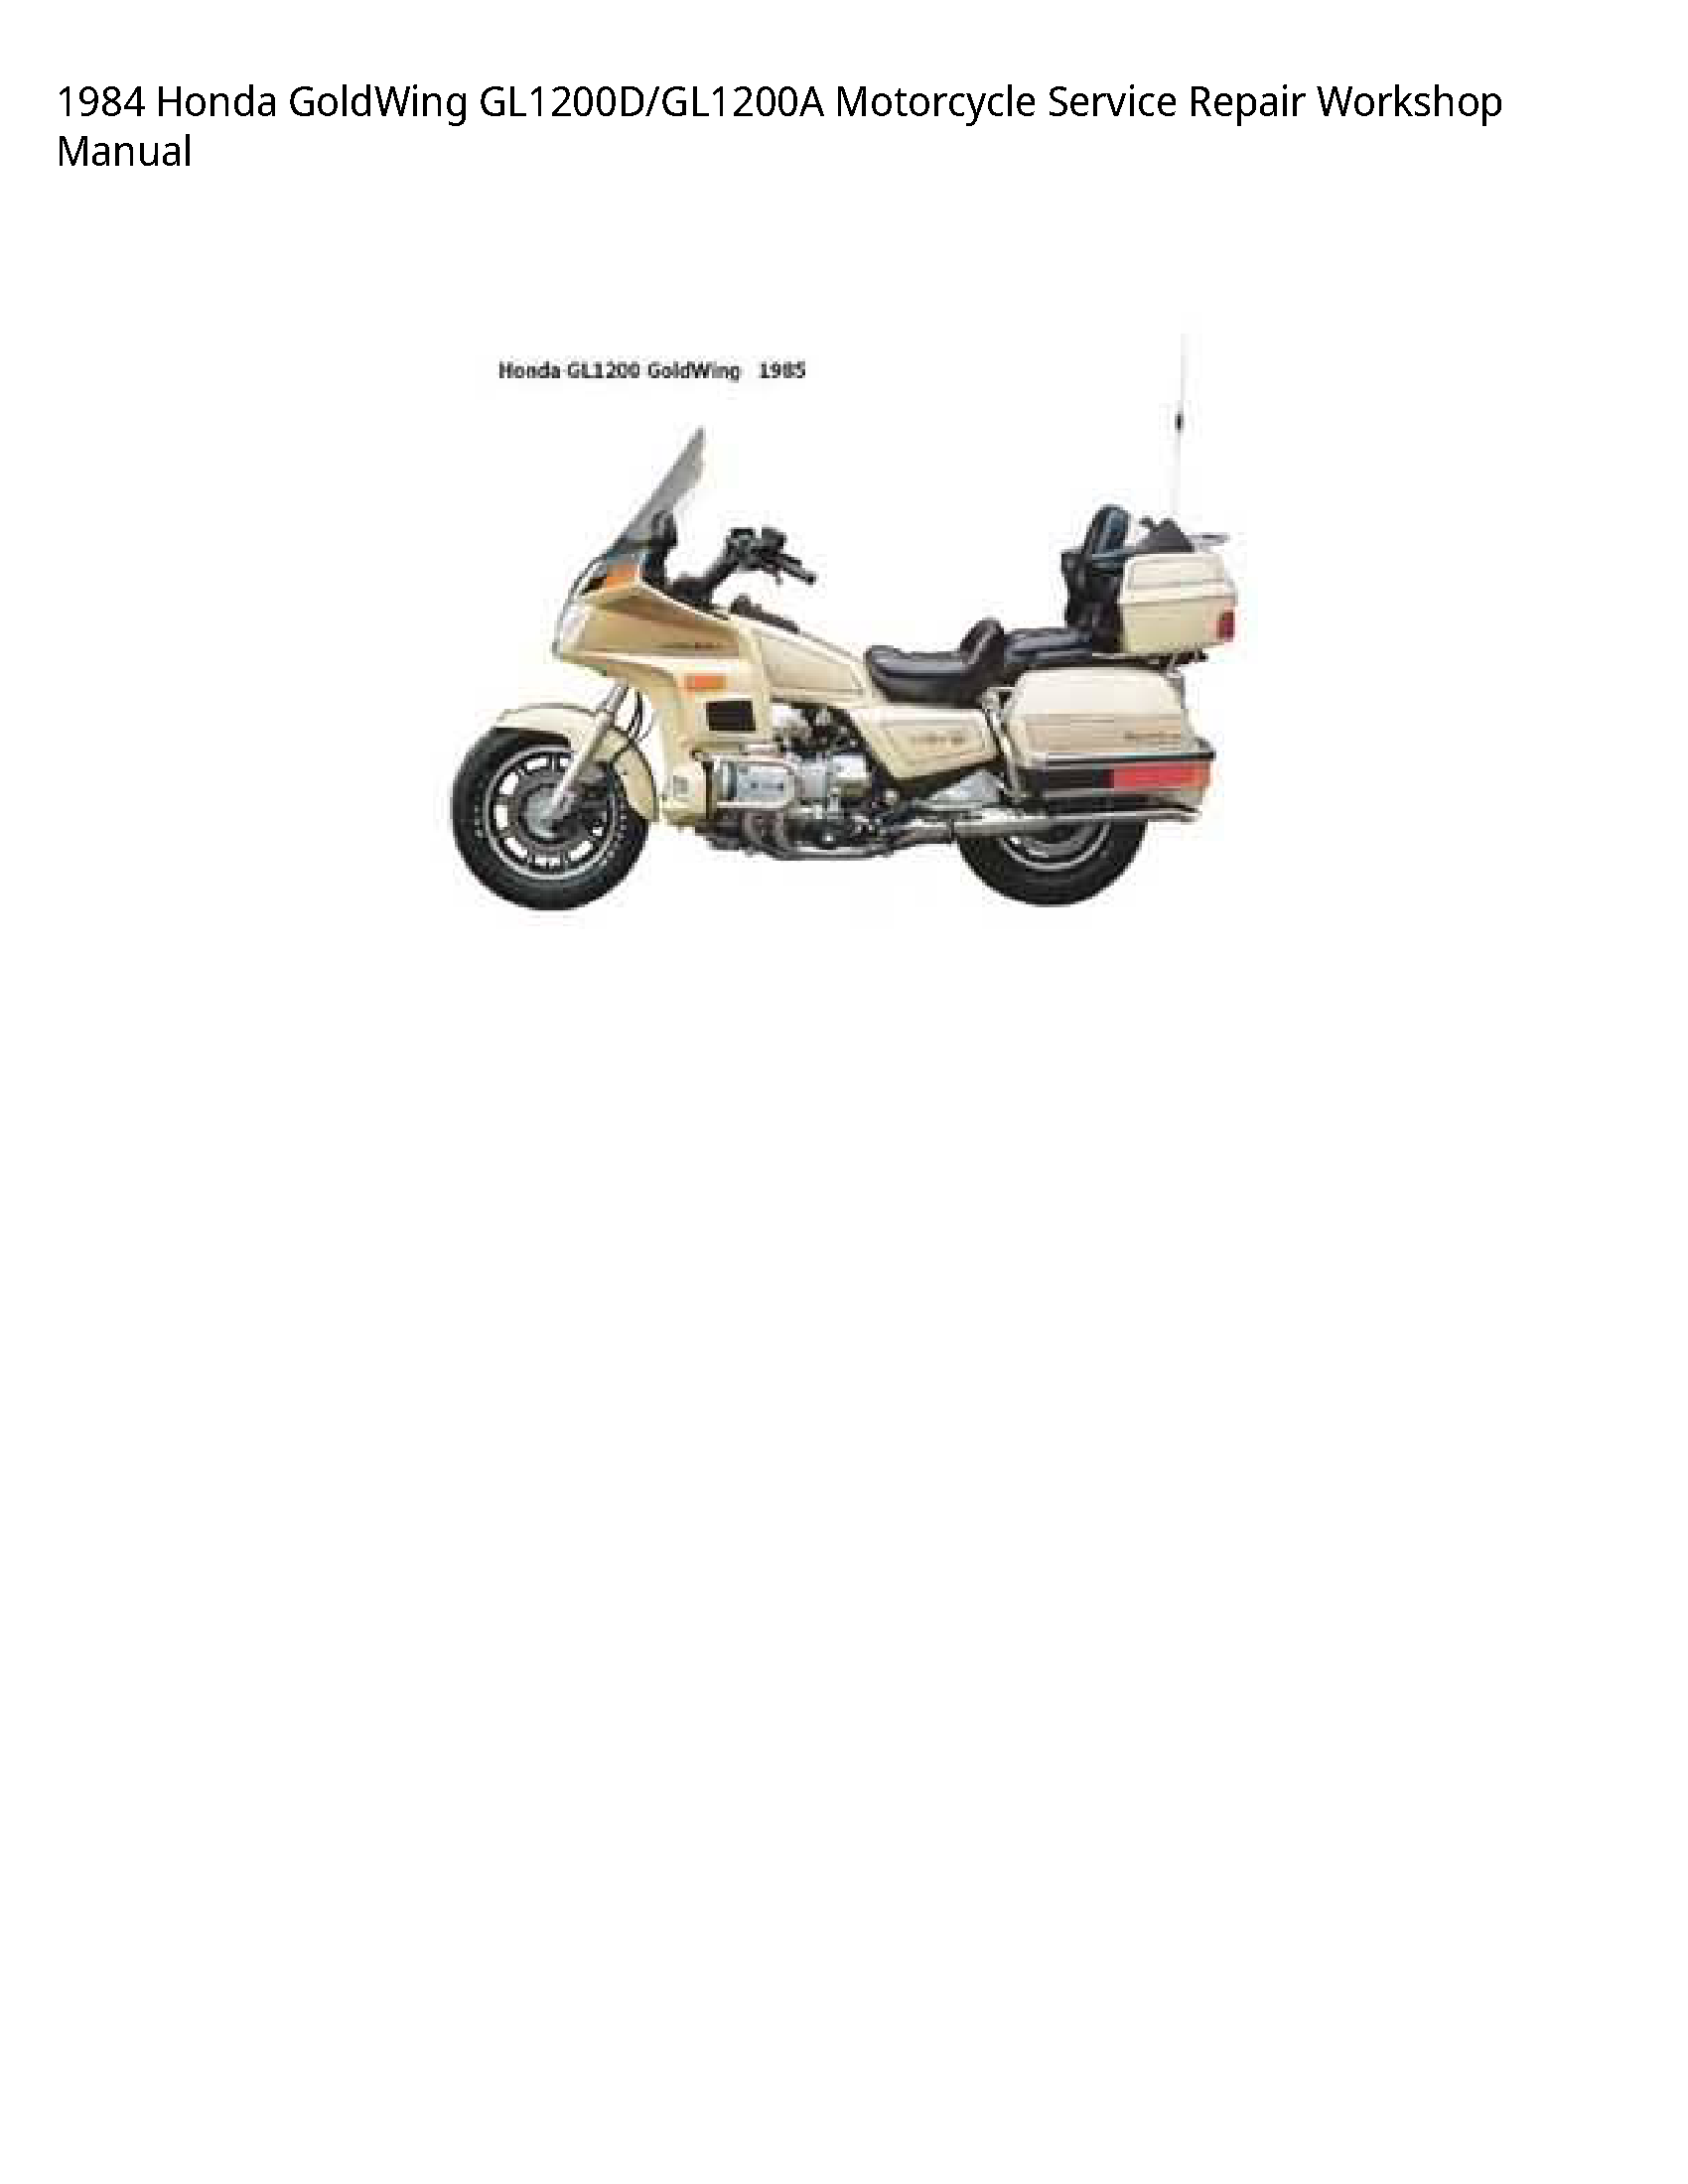 Honda GL1200D GoldWing Motorcycle manual